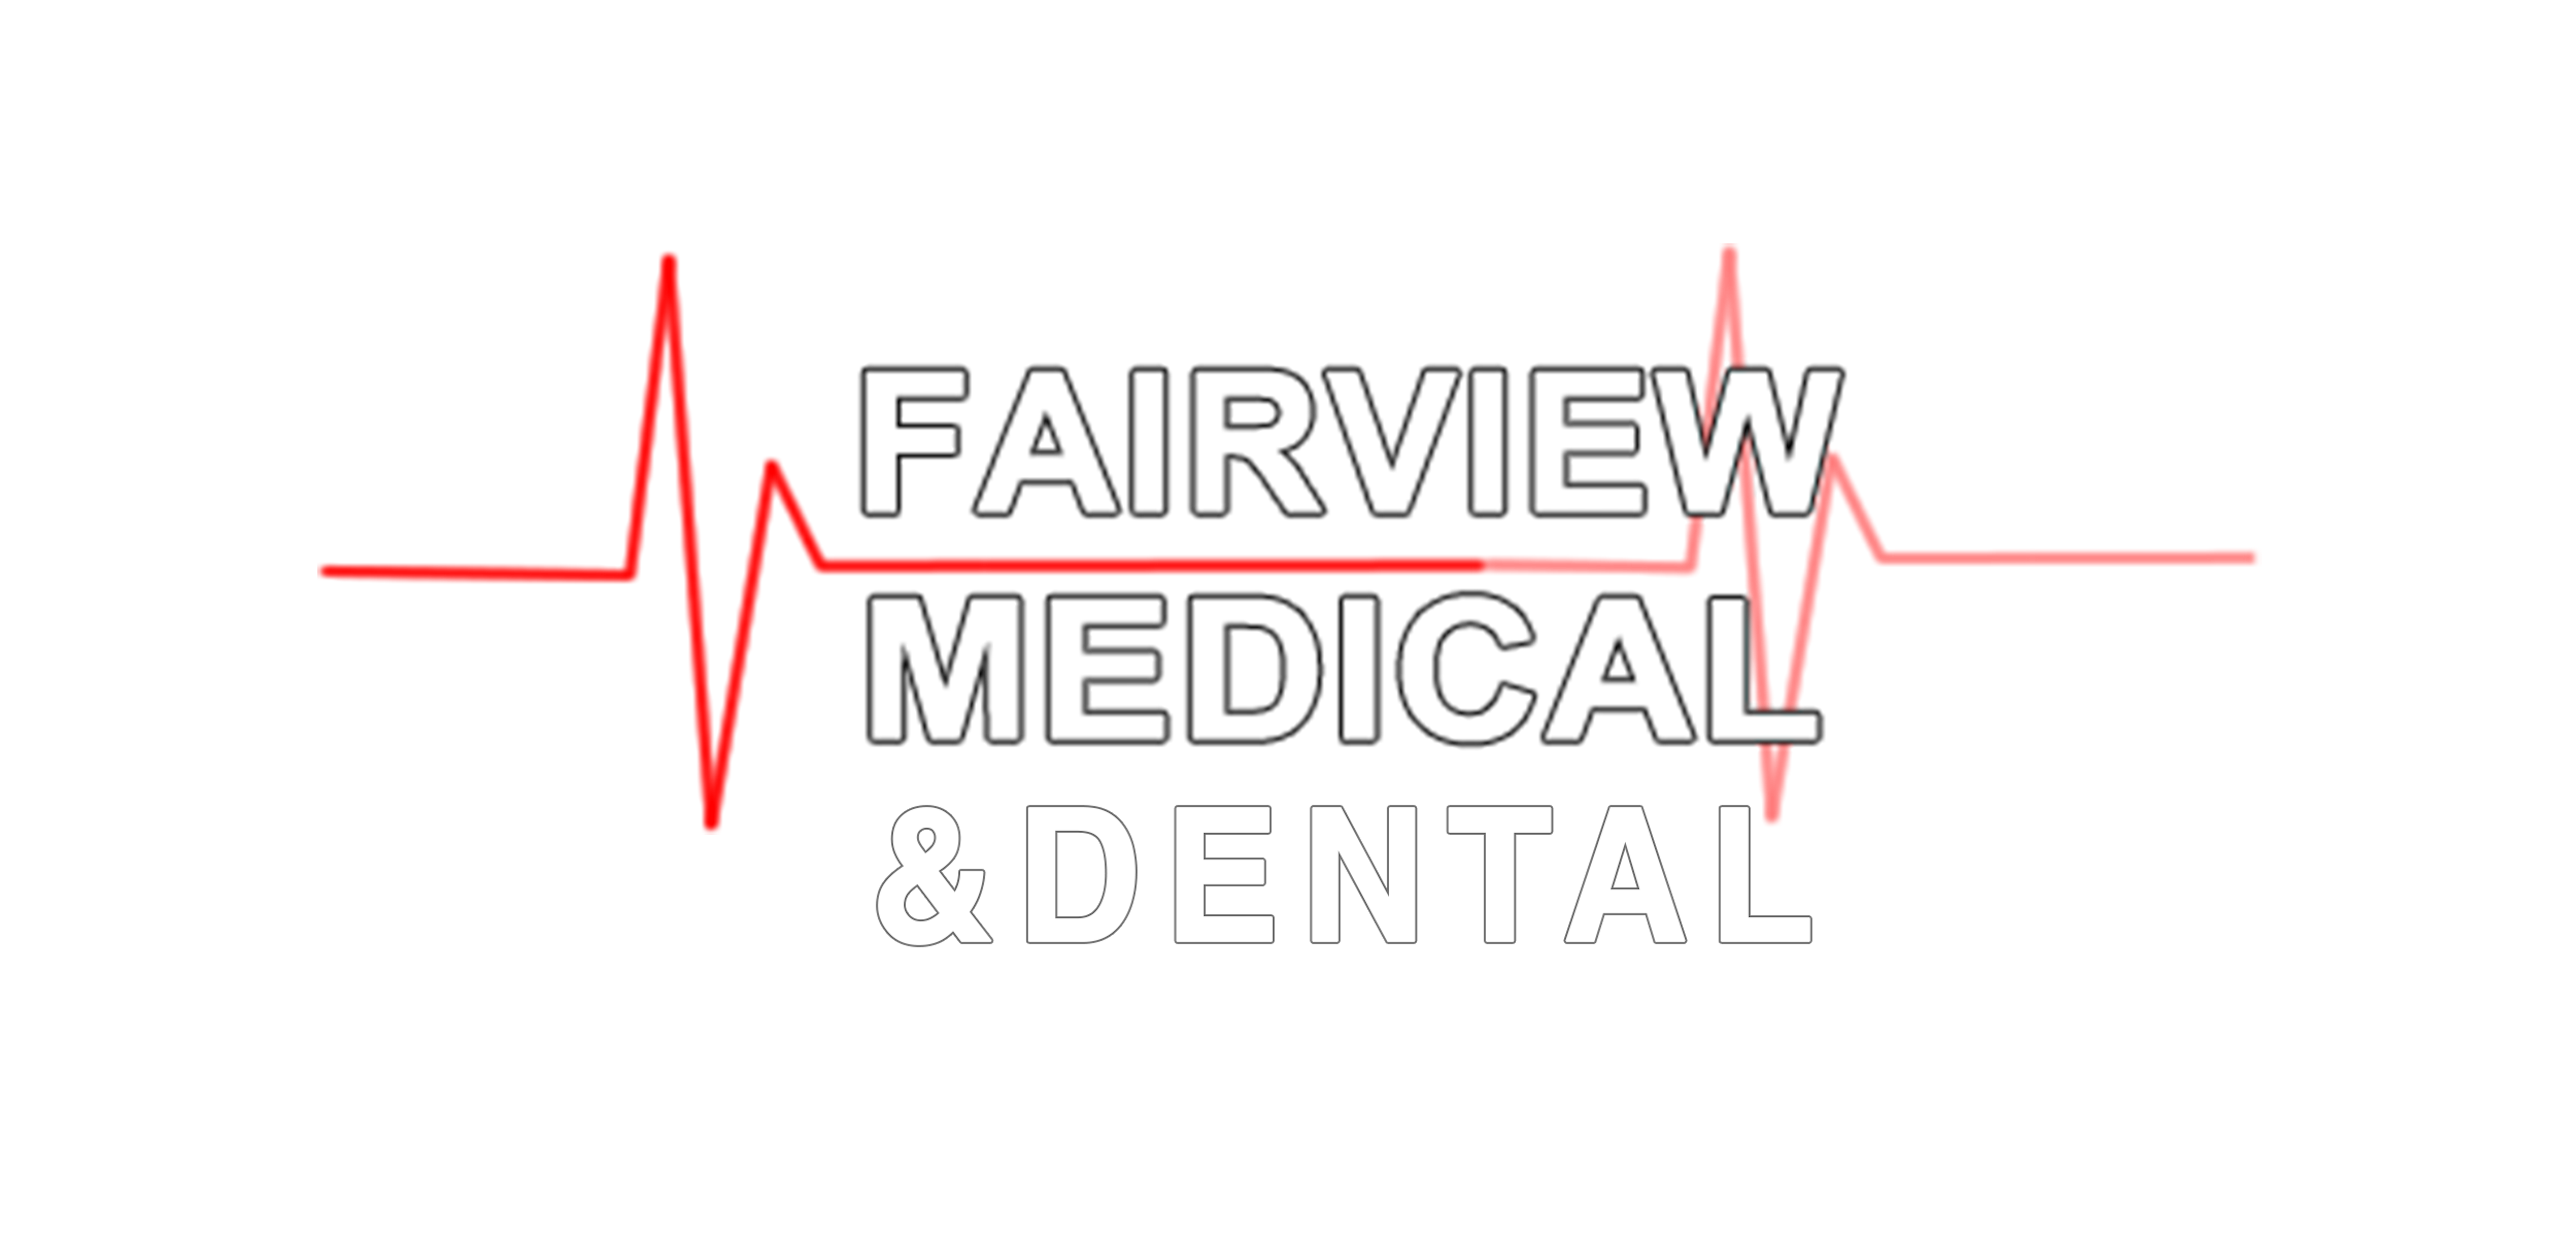 Fairview Medical & Dental